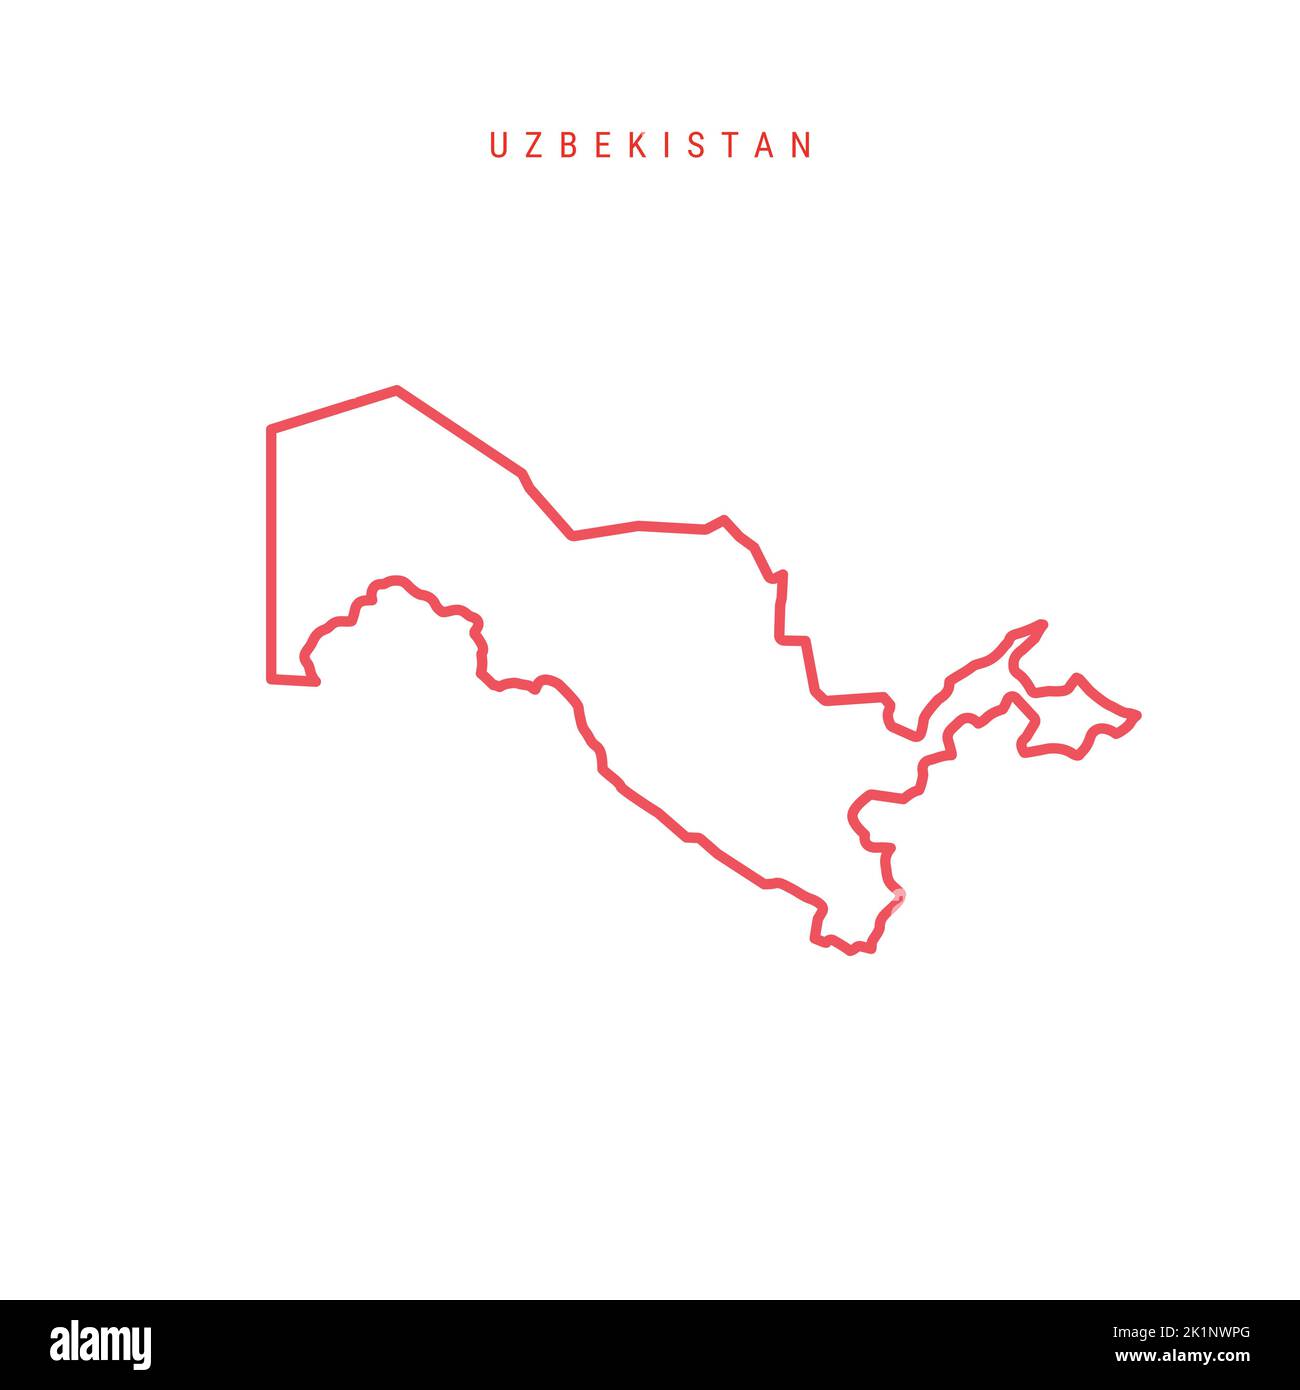 Uzbekistan editable outline map. Uzbek red border. Country name. Adjust line weight. Change to any color. Vector illustration. Stock Vector